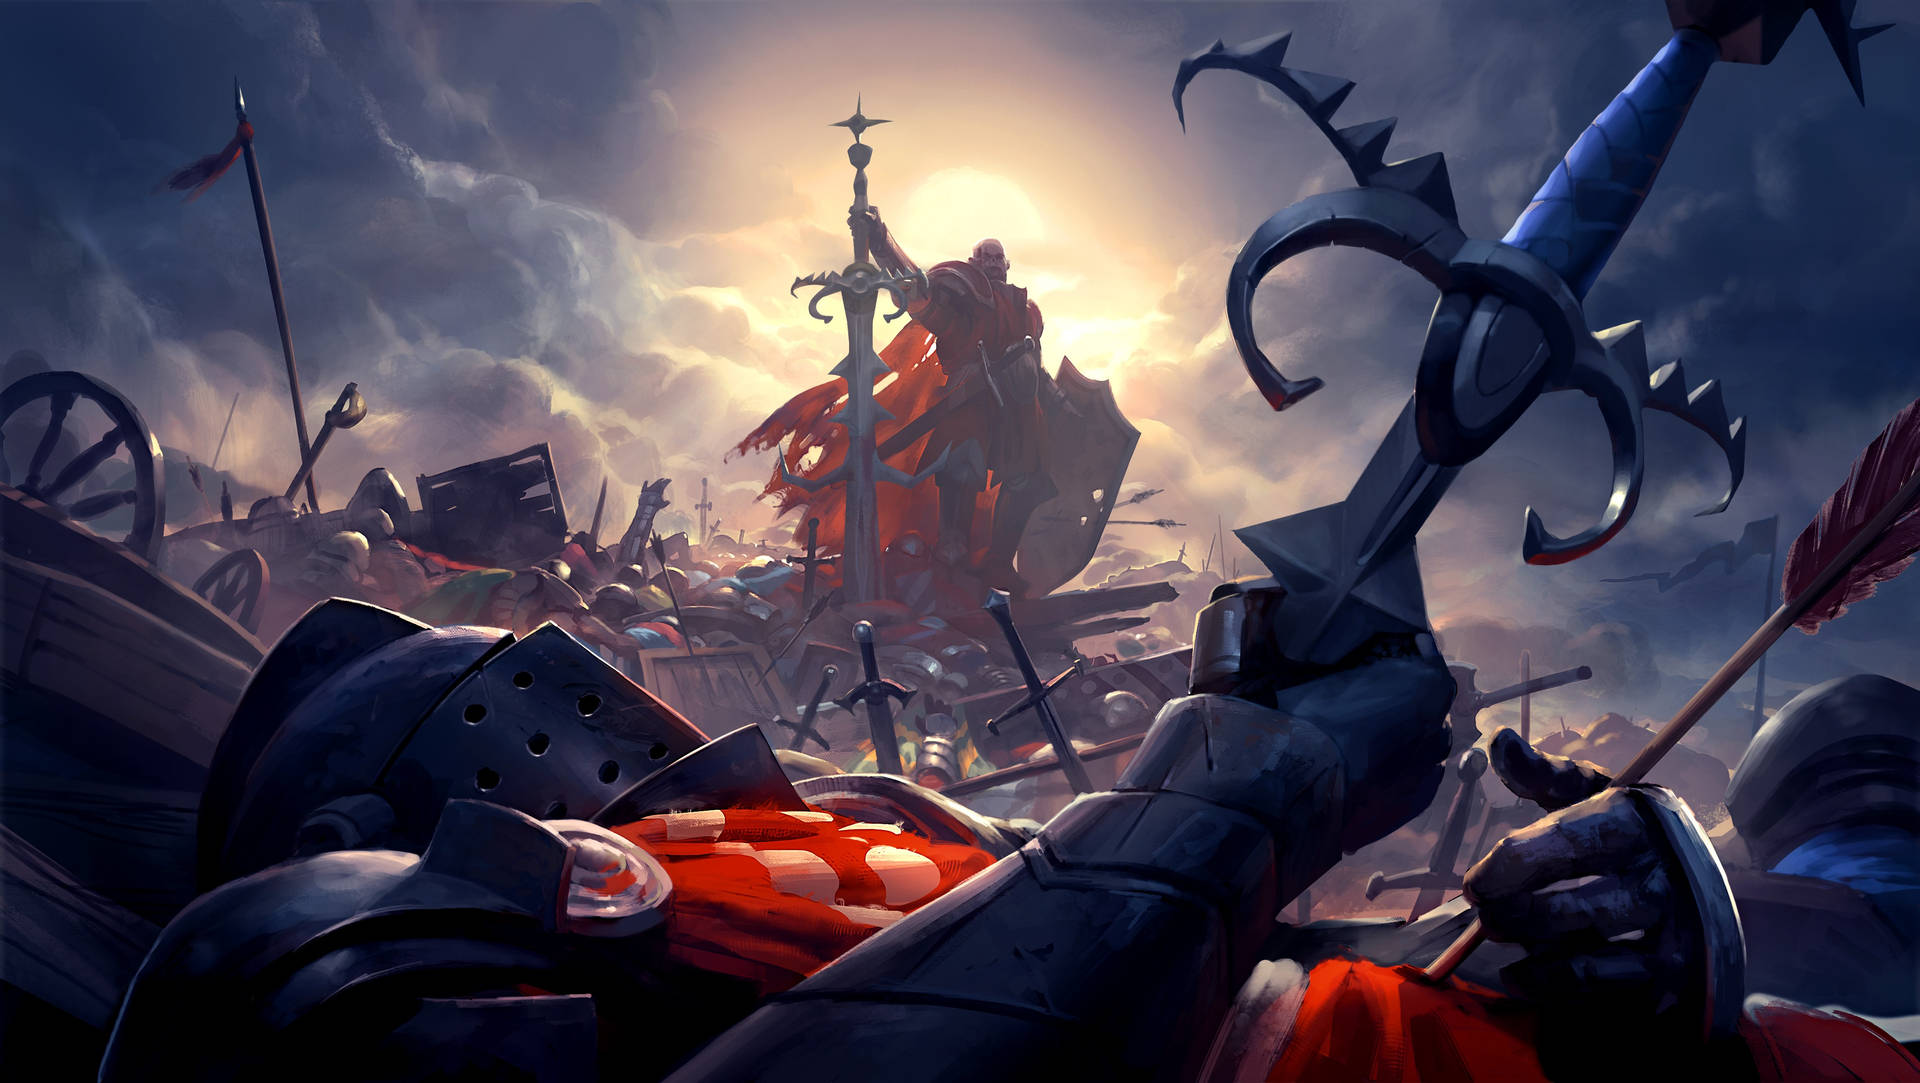 Runescape In Battle Background